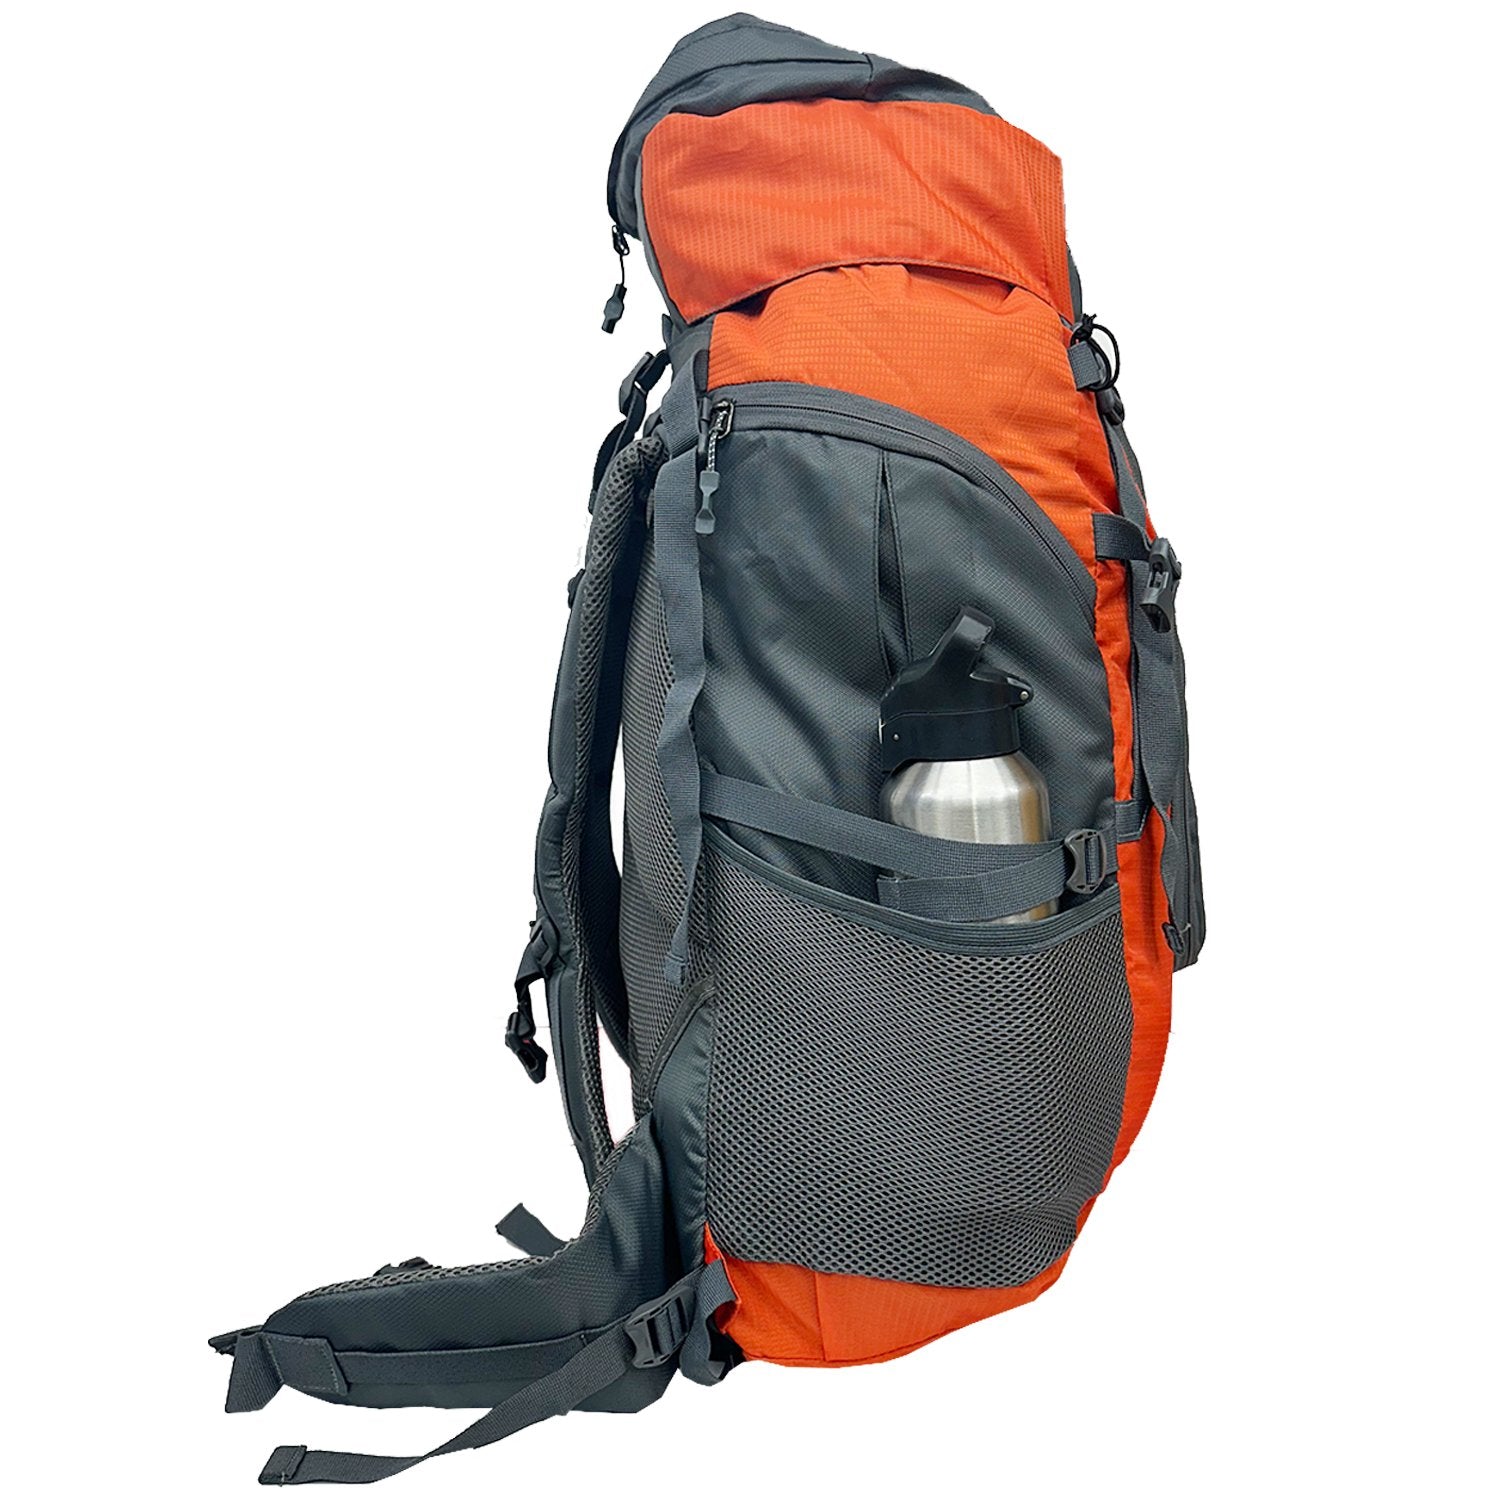 Buy Gokyo Kalimpong Travel Backpack 40 + 5 Ltrs | Trekking Backpack at Gokyo Outdoor Clothing & Gear